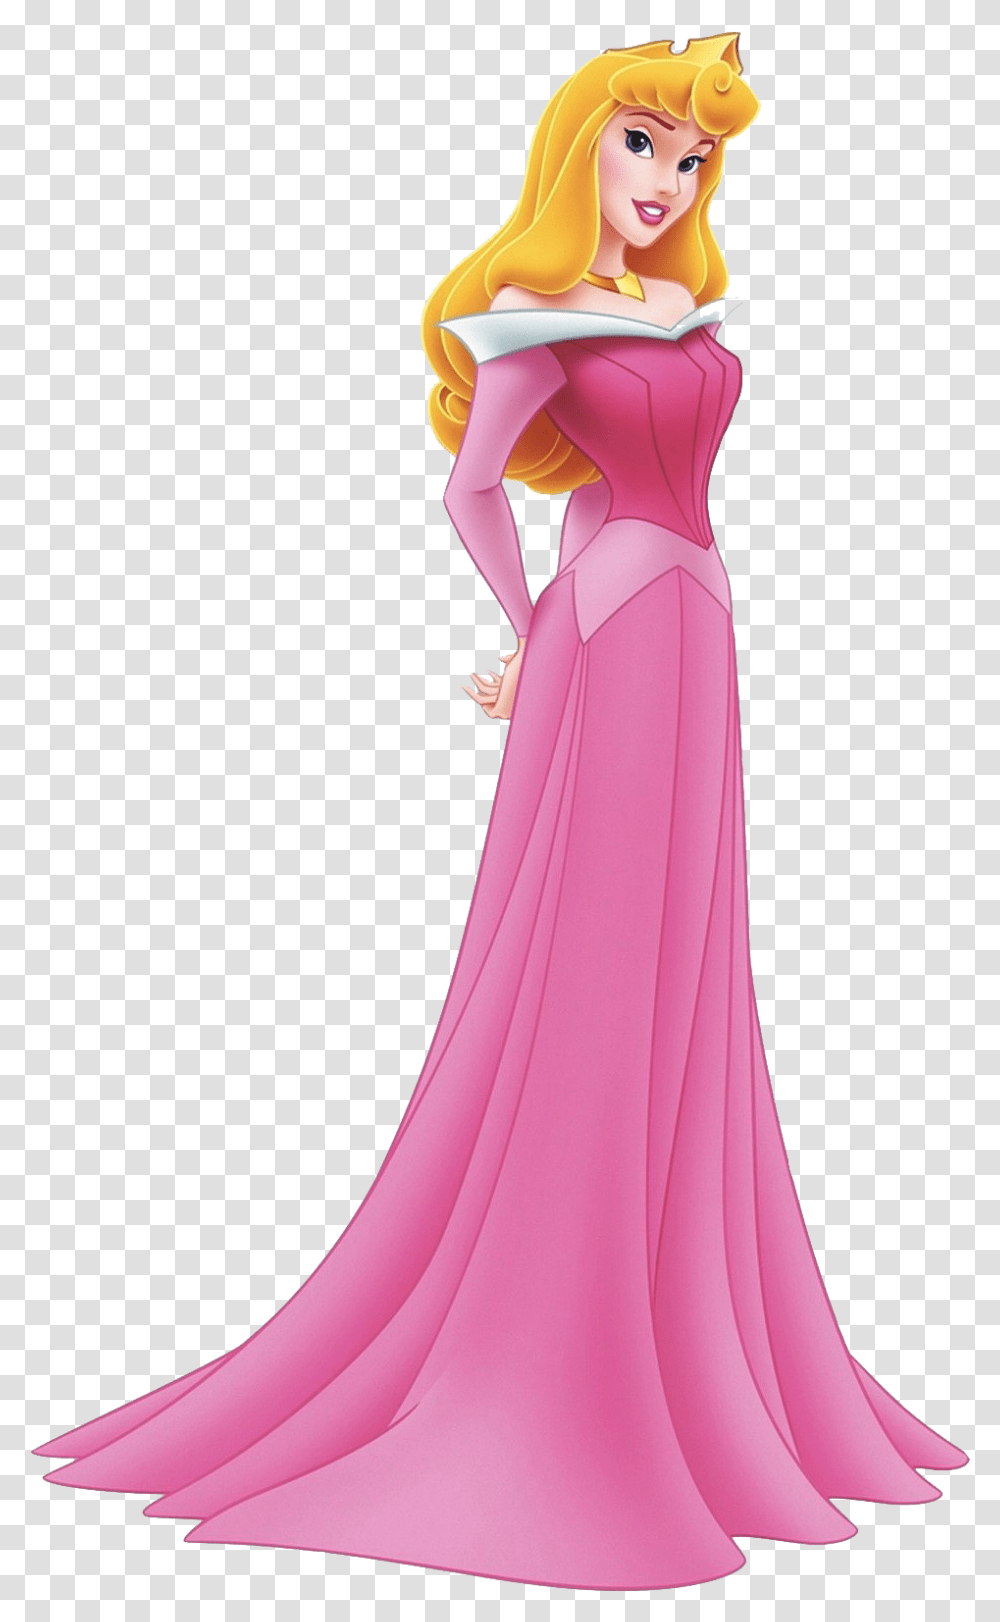 Princess Aurora Free Image Princess Cartoon Sleeping Beauty, Clothing, Apparel, Evening Dress, Robe Transparent Png